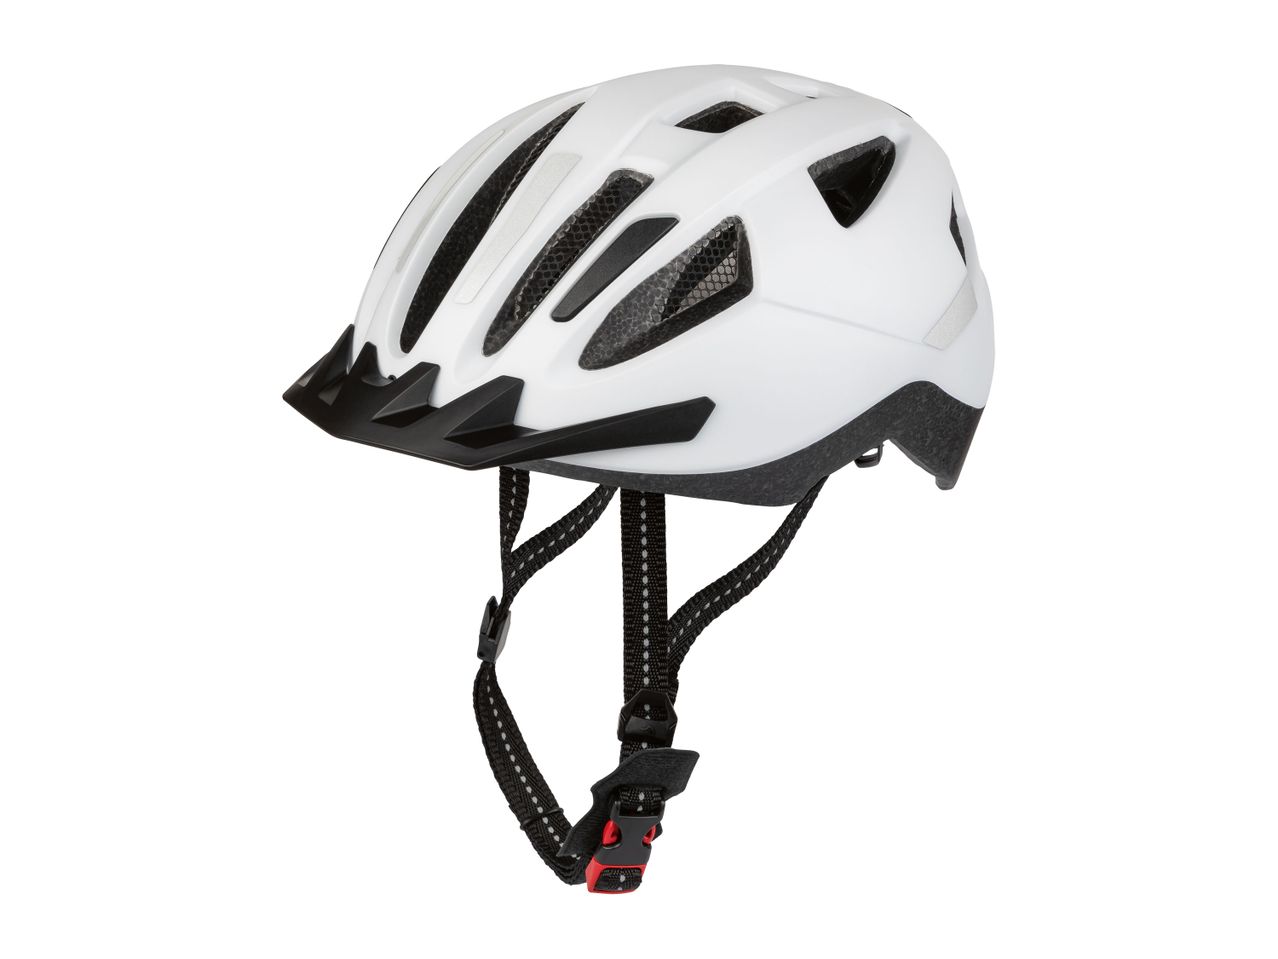 Go to full screen view: Crivit Bike Helmet with Rear Light - Image 3